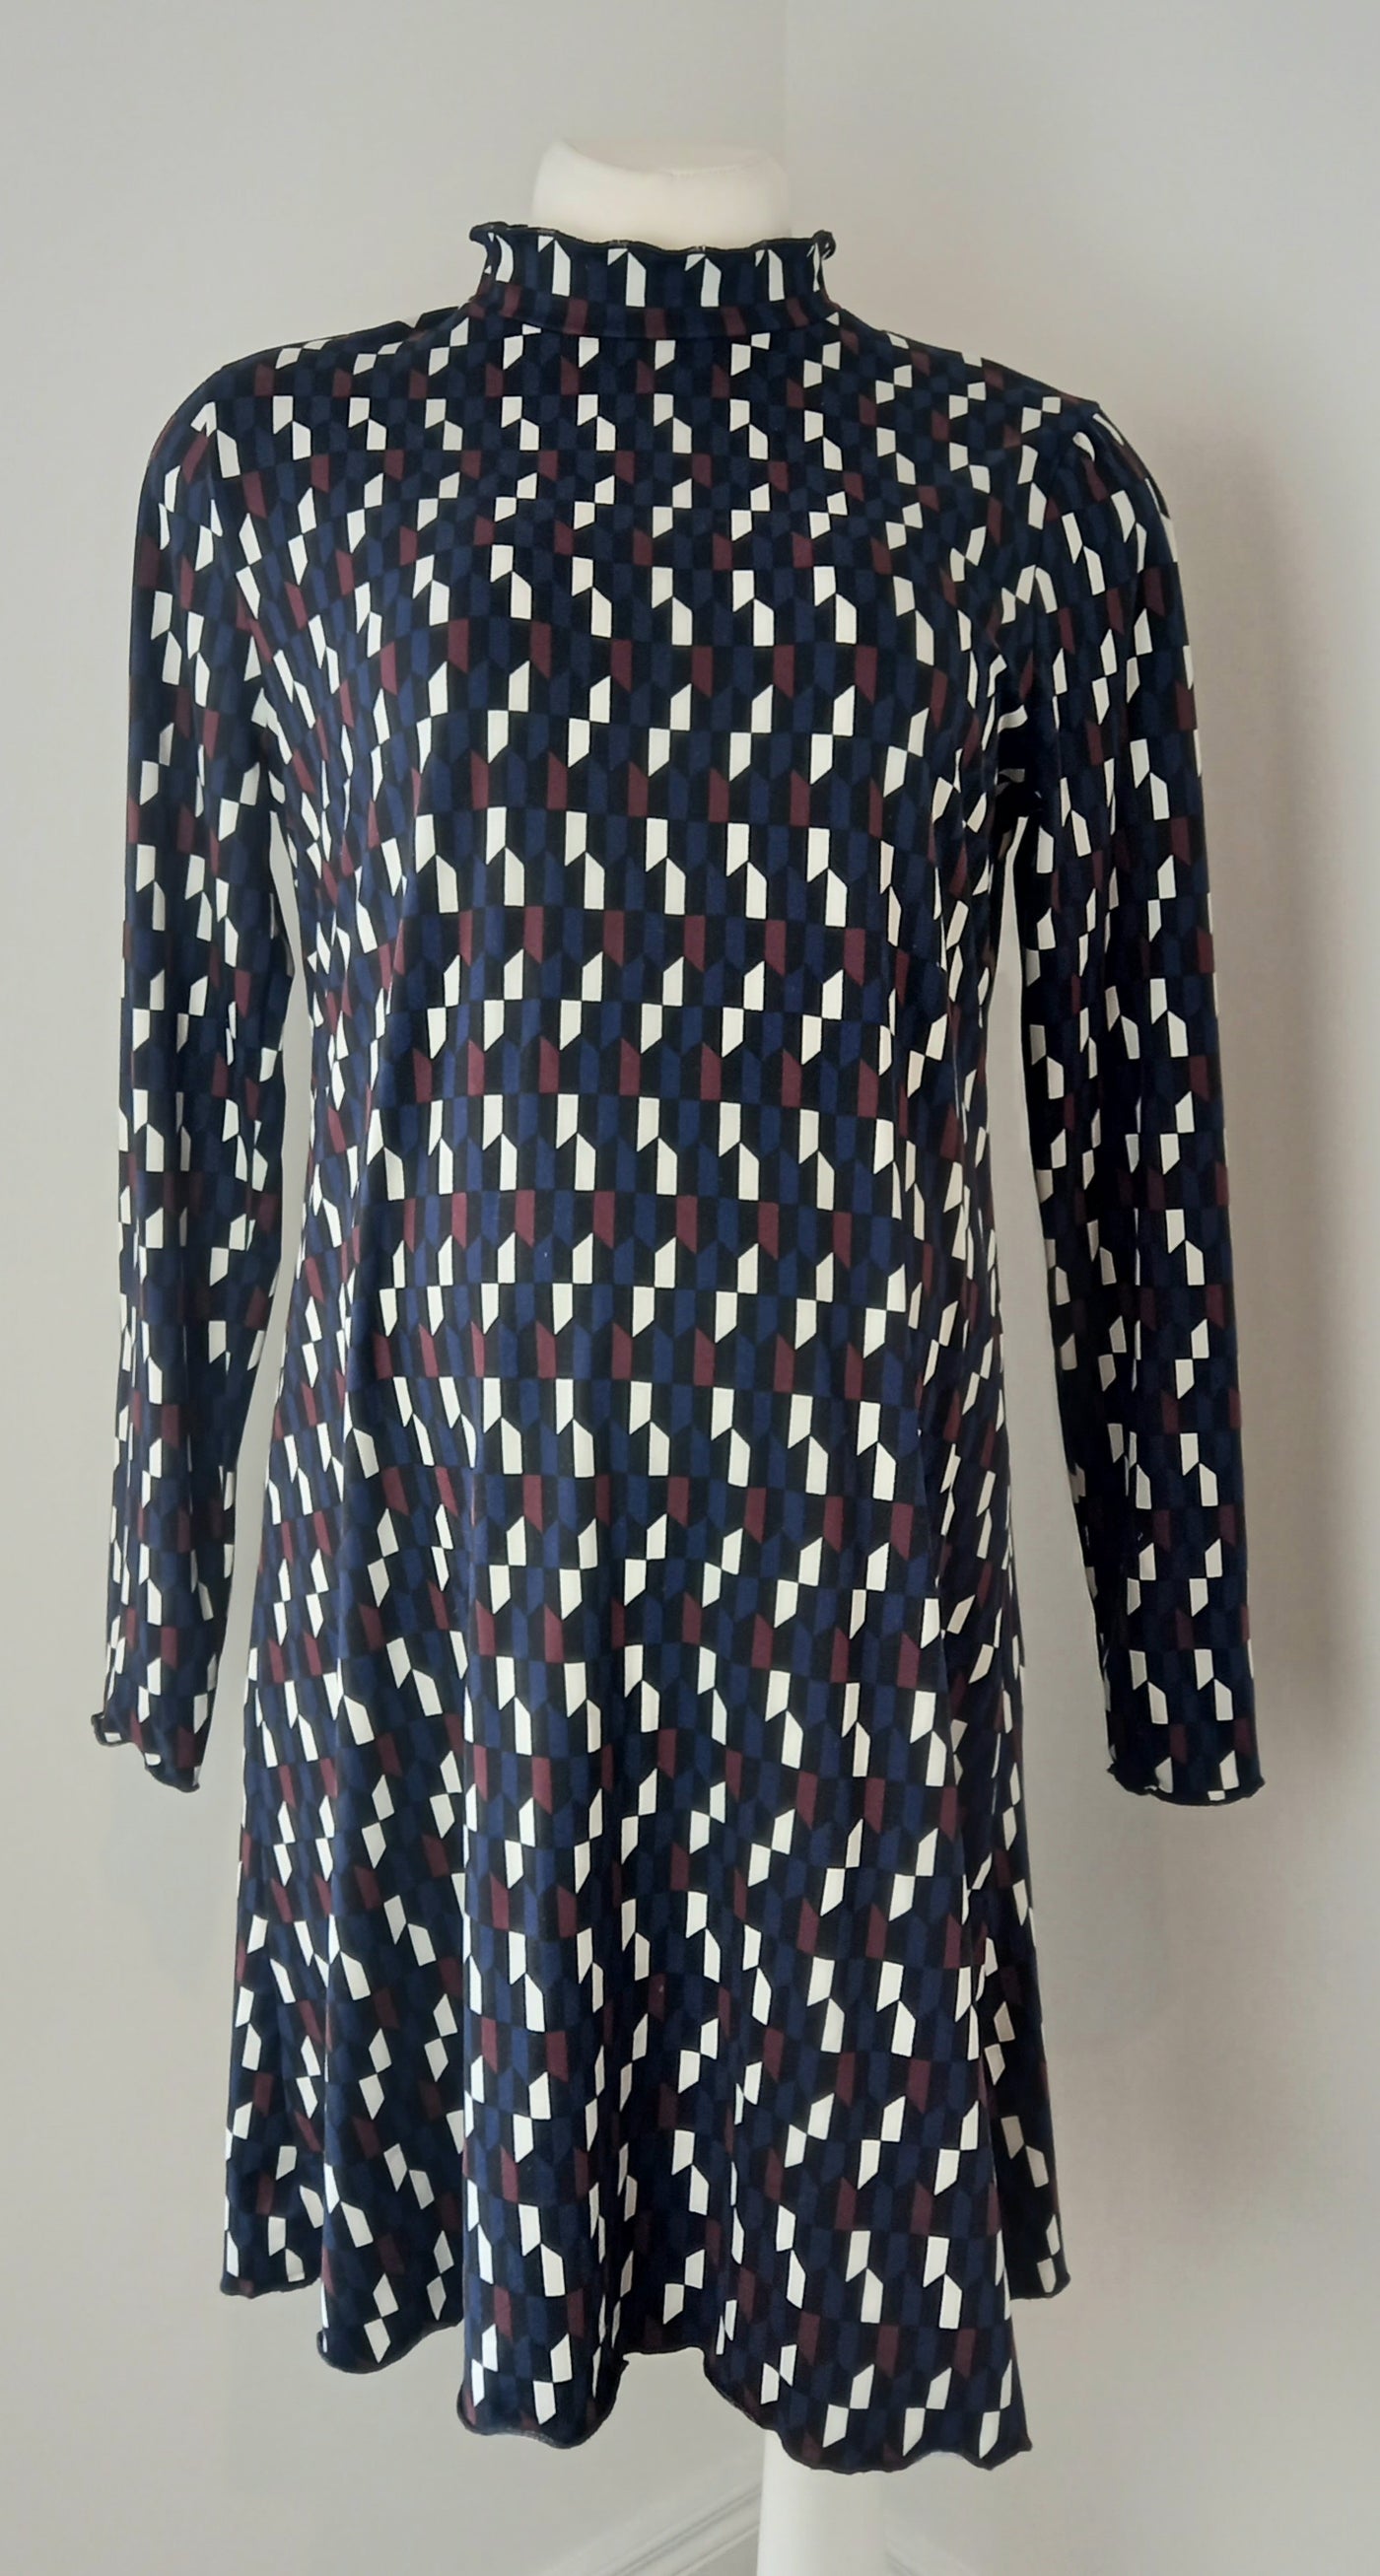 Primark Black, Blue, Maroon & White Geometric Print Dress - Size 14 (would suit size 12/14)